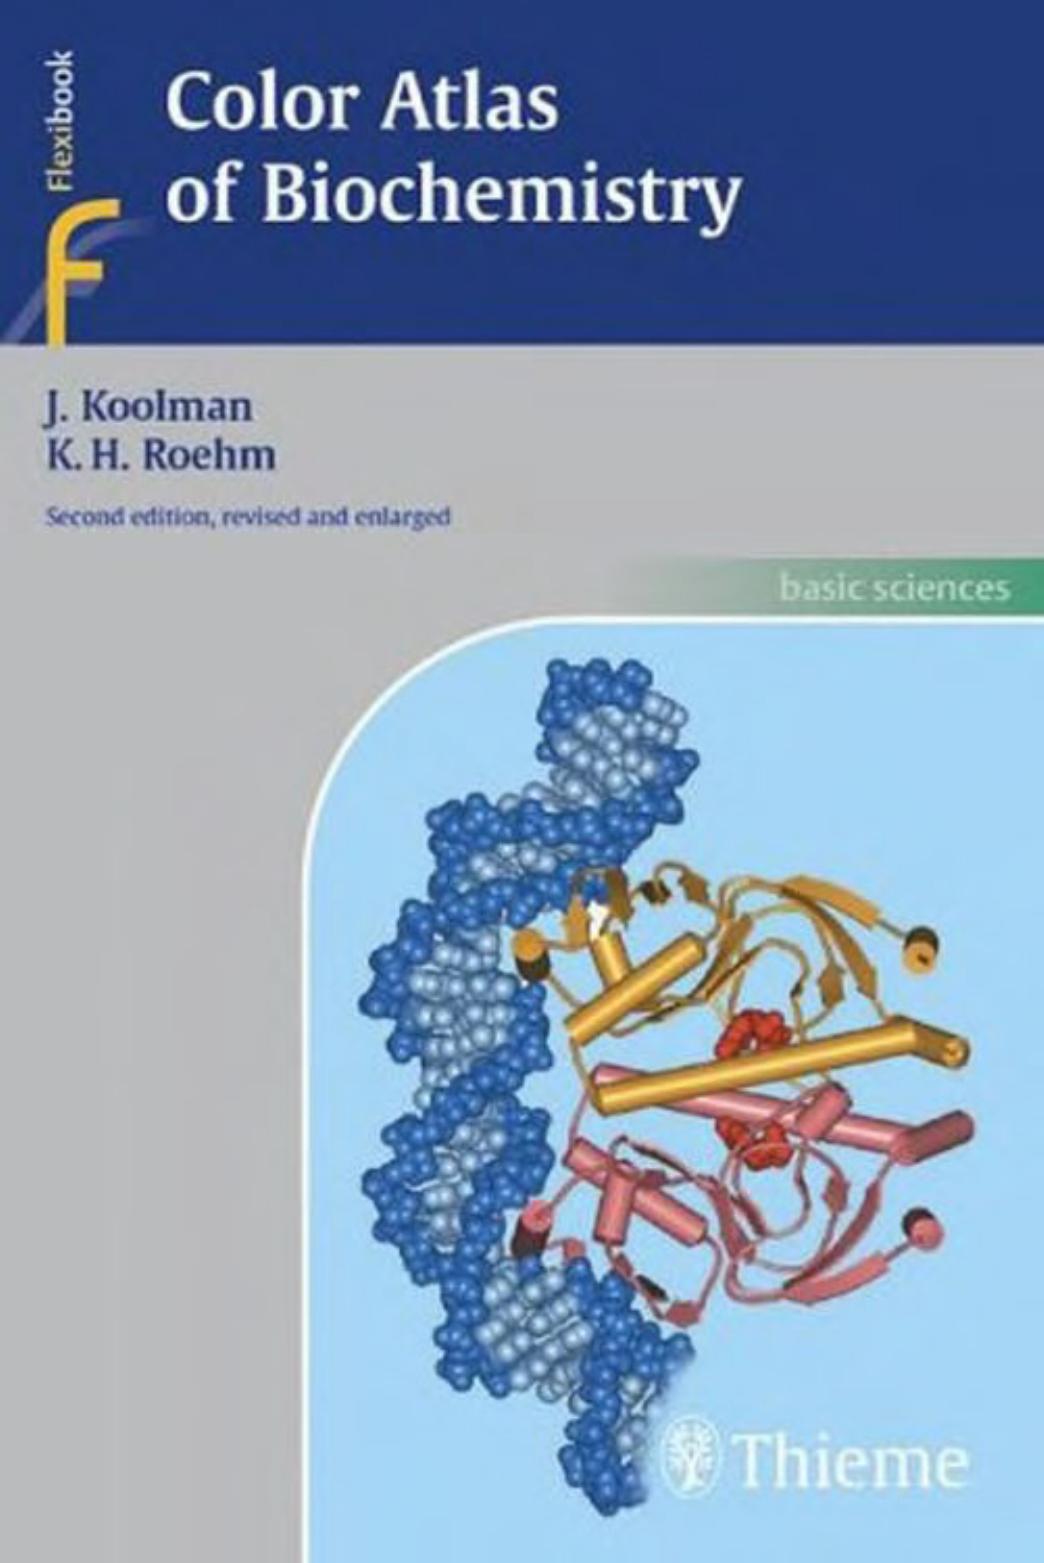 Color Atlas of Biochemistry, 2nd edition